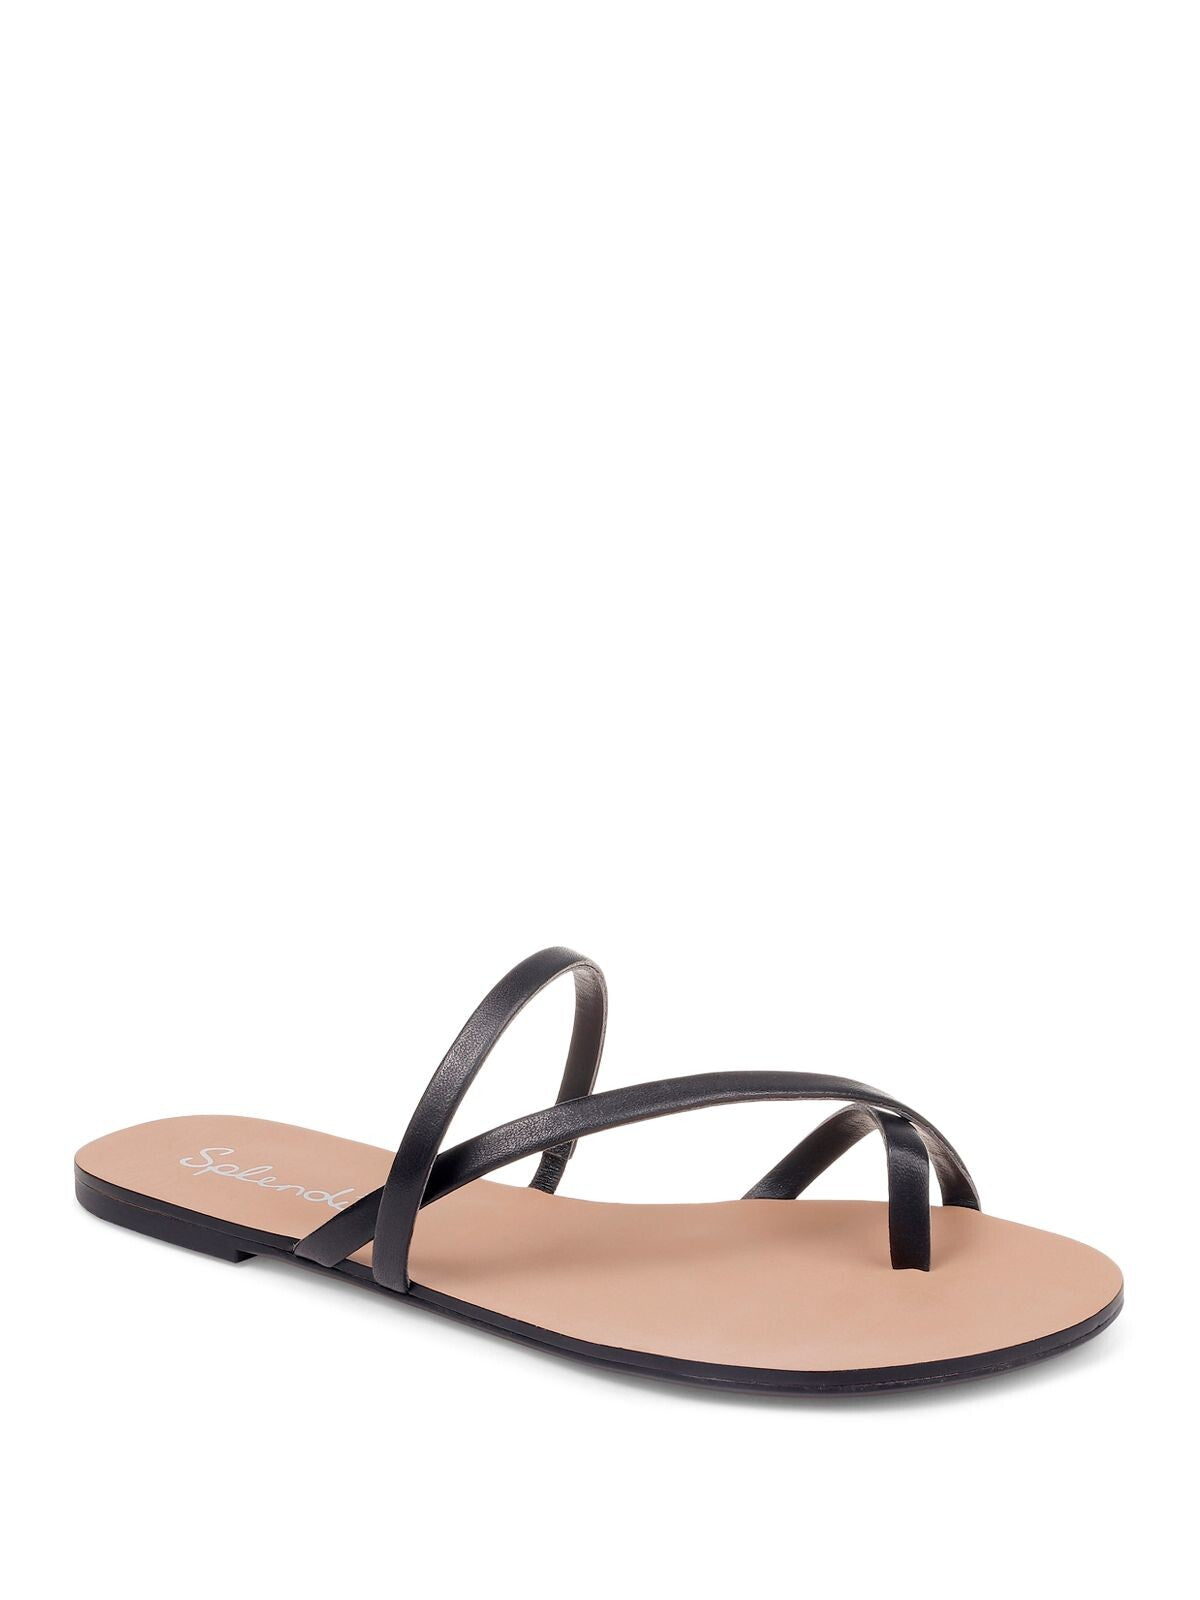 SPLENDID Womens Black Toe Loop Crisscross Strappy Trenton Round Toe Slip On Leather Slide Sandals Shoes 9 M